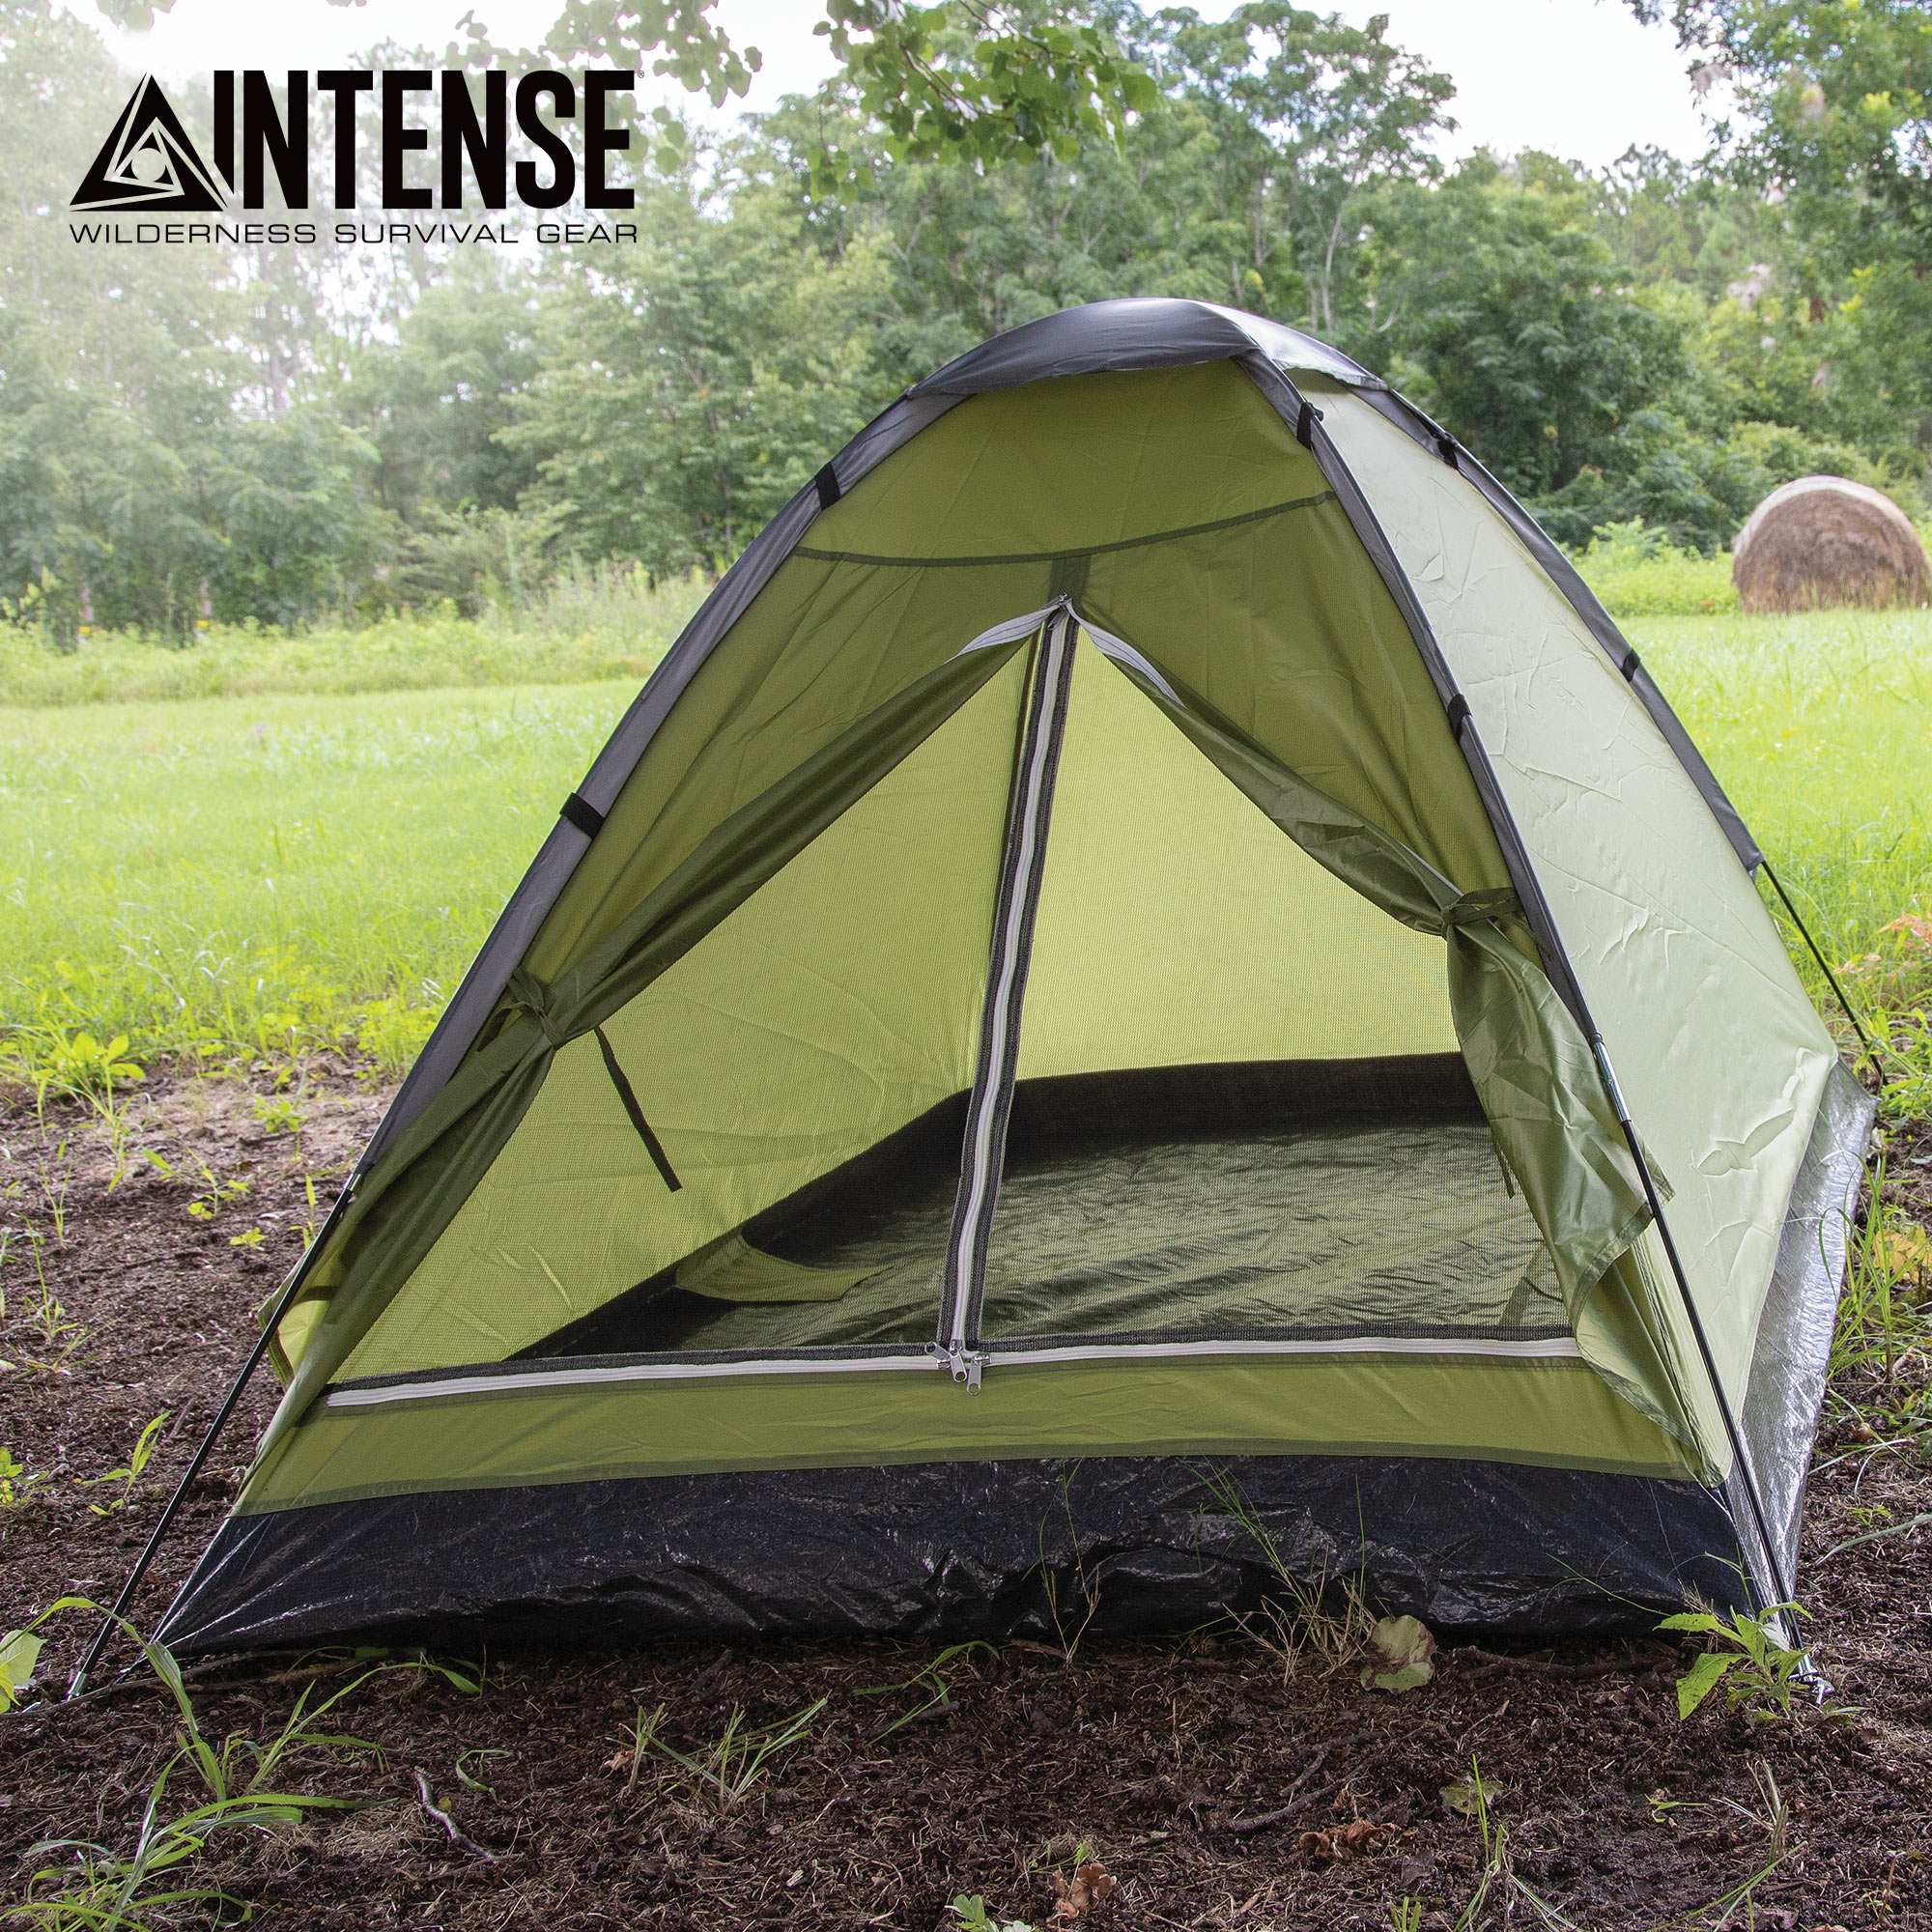 Intense Ultra-Light Two-Person OD Dome Tent - 180T Polyester Construction, PA Coating, Fiberglass Poles, Polyethylene Groundsheet